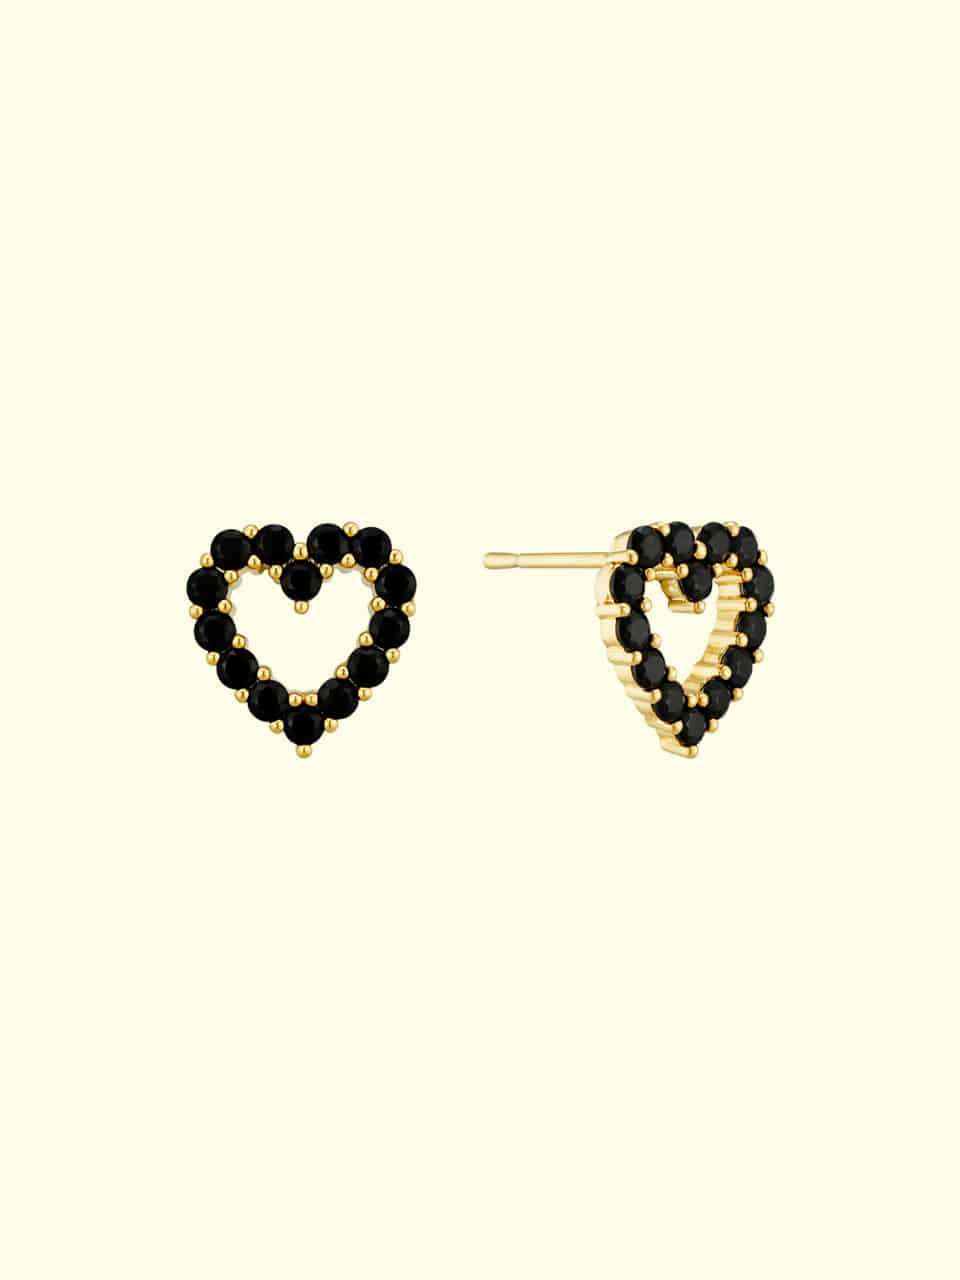 [Sending on the same day] Black cubic heart earring.